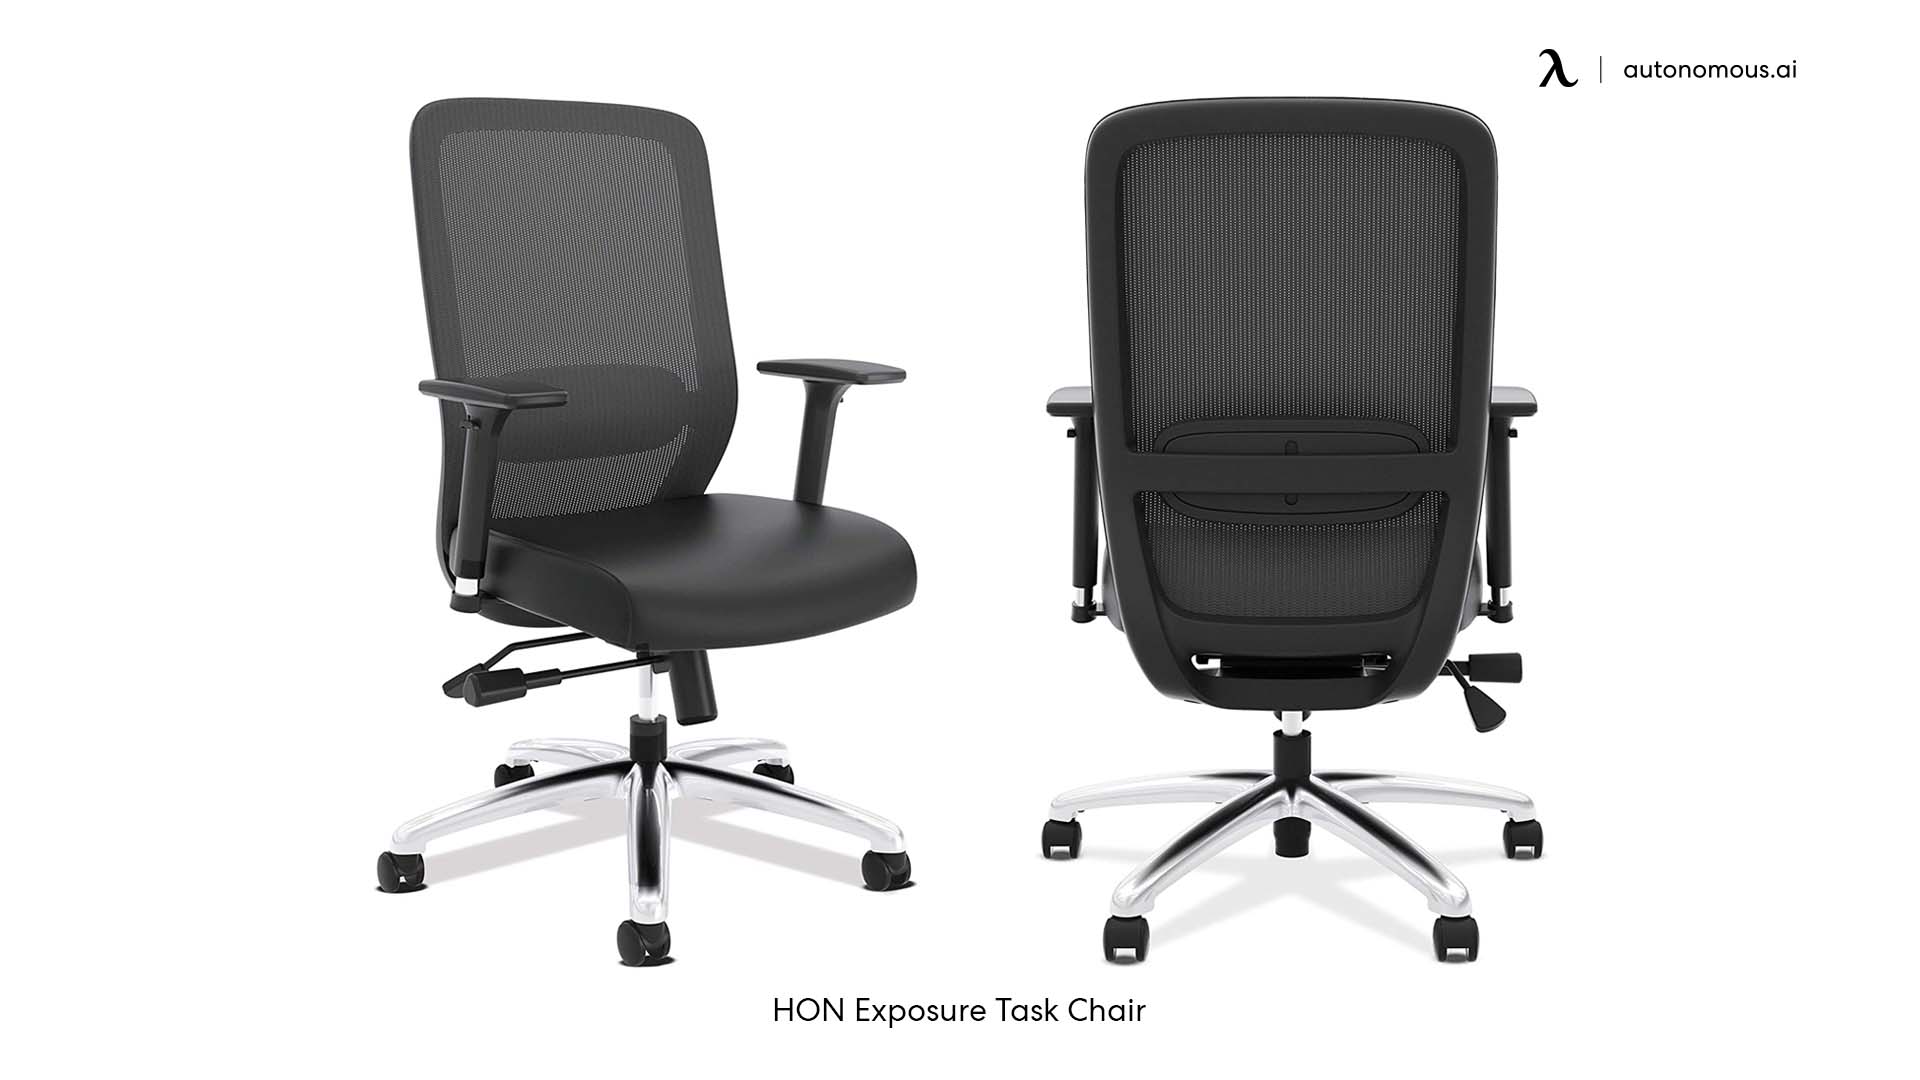 HON Exposure Task Chair